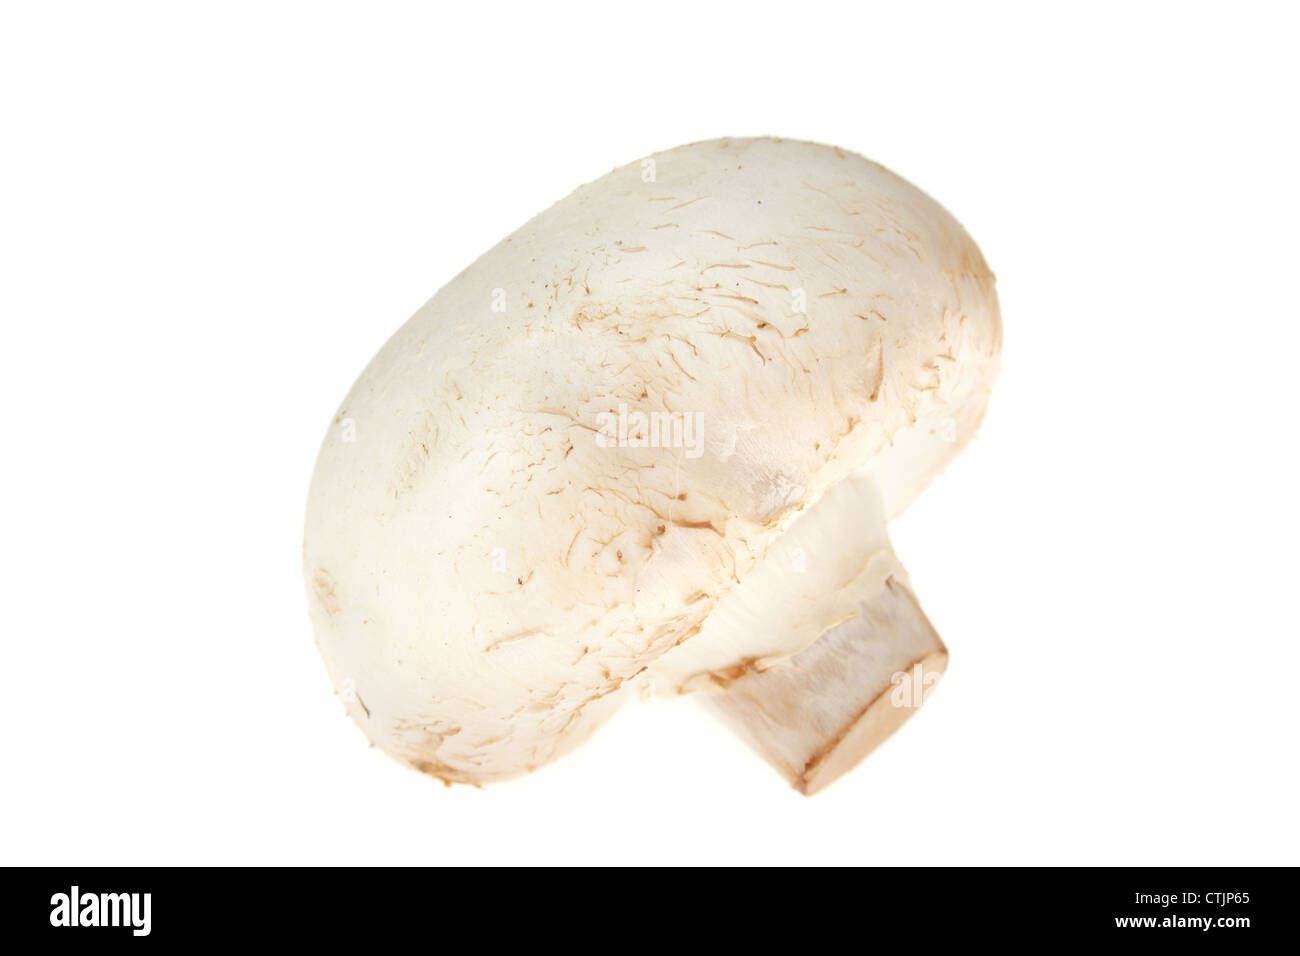 one mushrooms photo on the white background Stock Photo